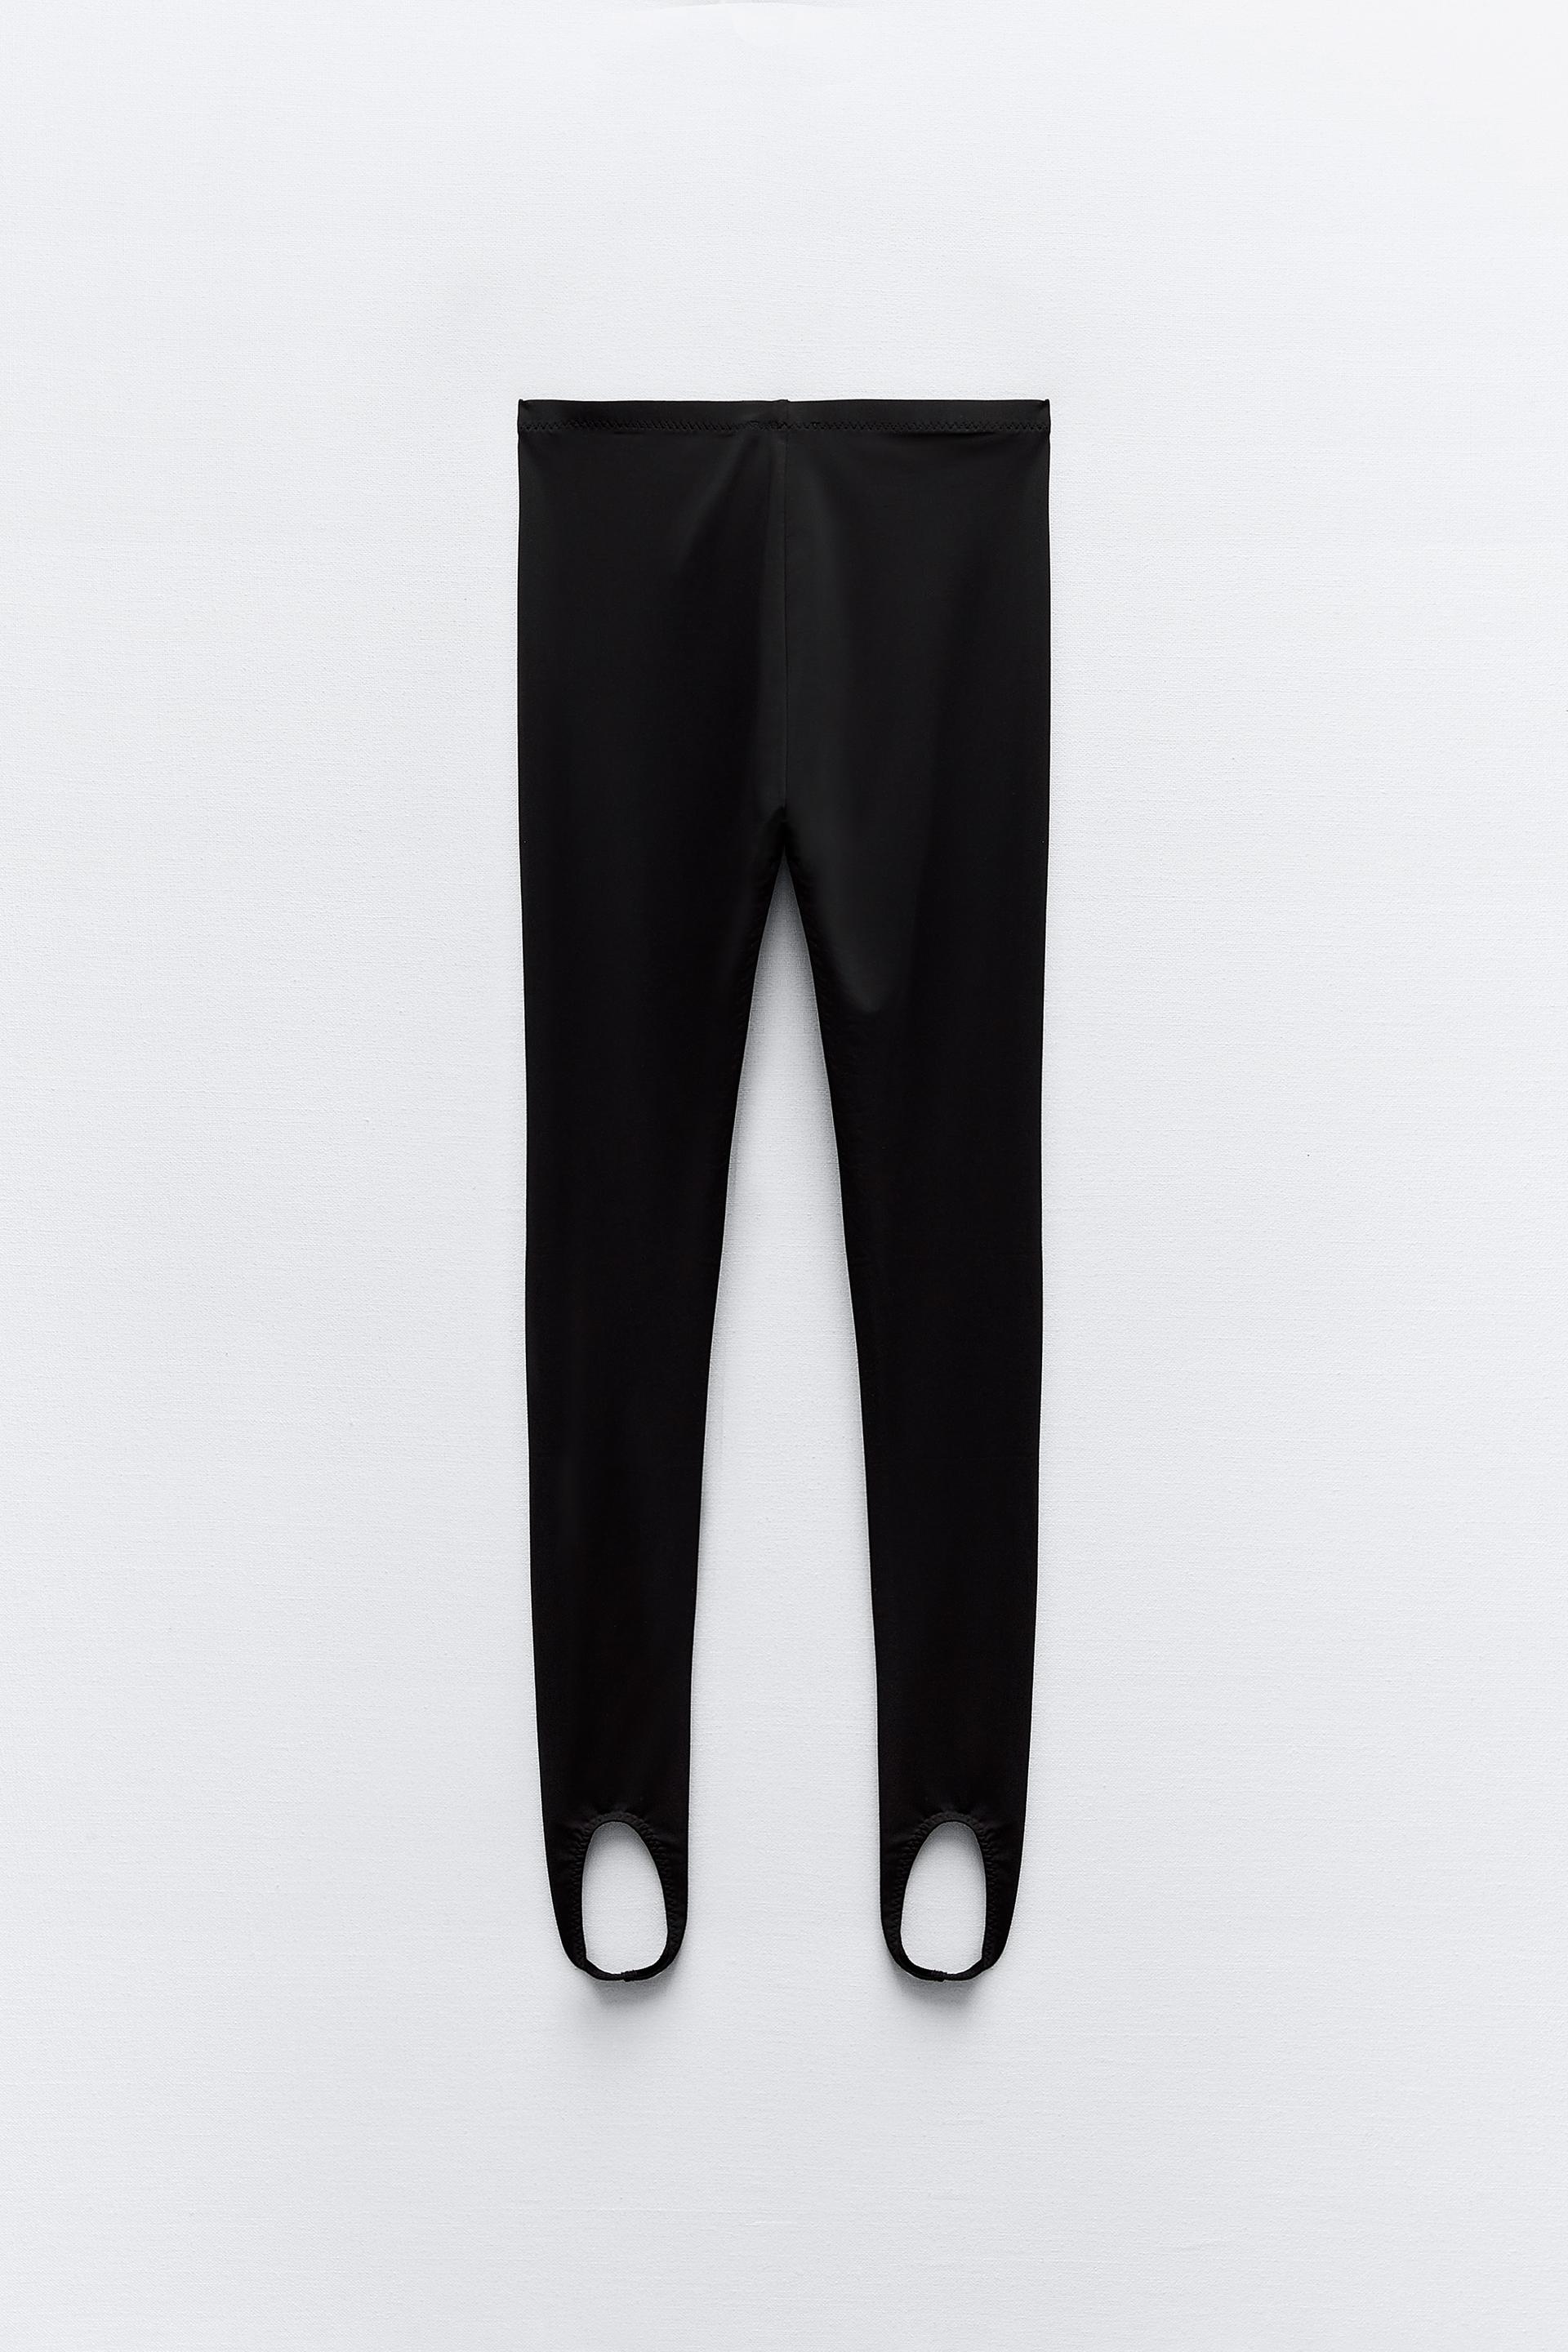 Stirrup leggings BALESPO BC510-200 (polyamide) black size 44 (164)